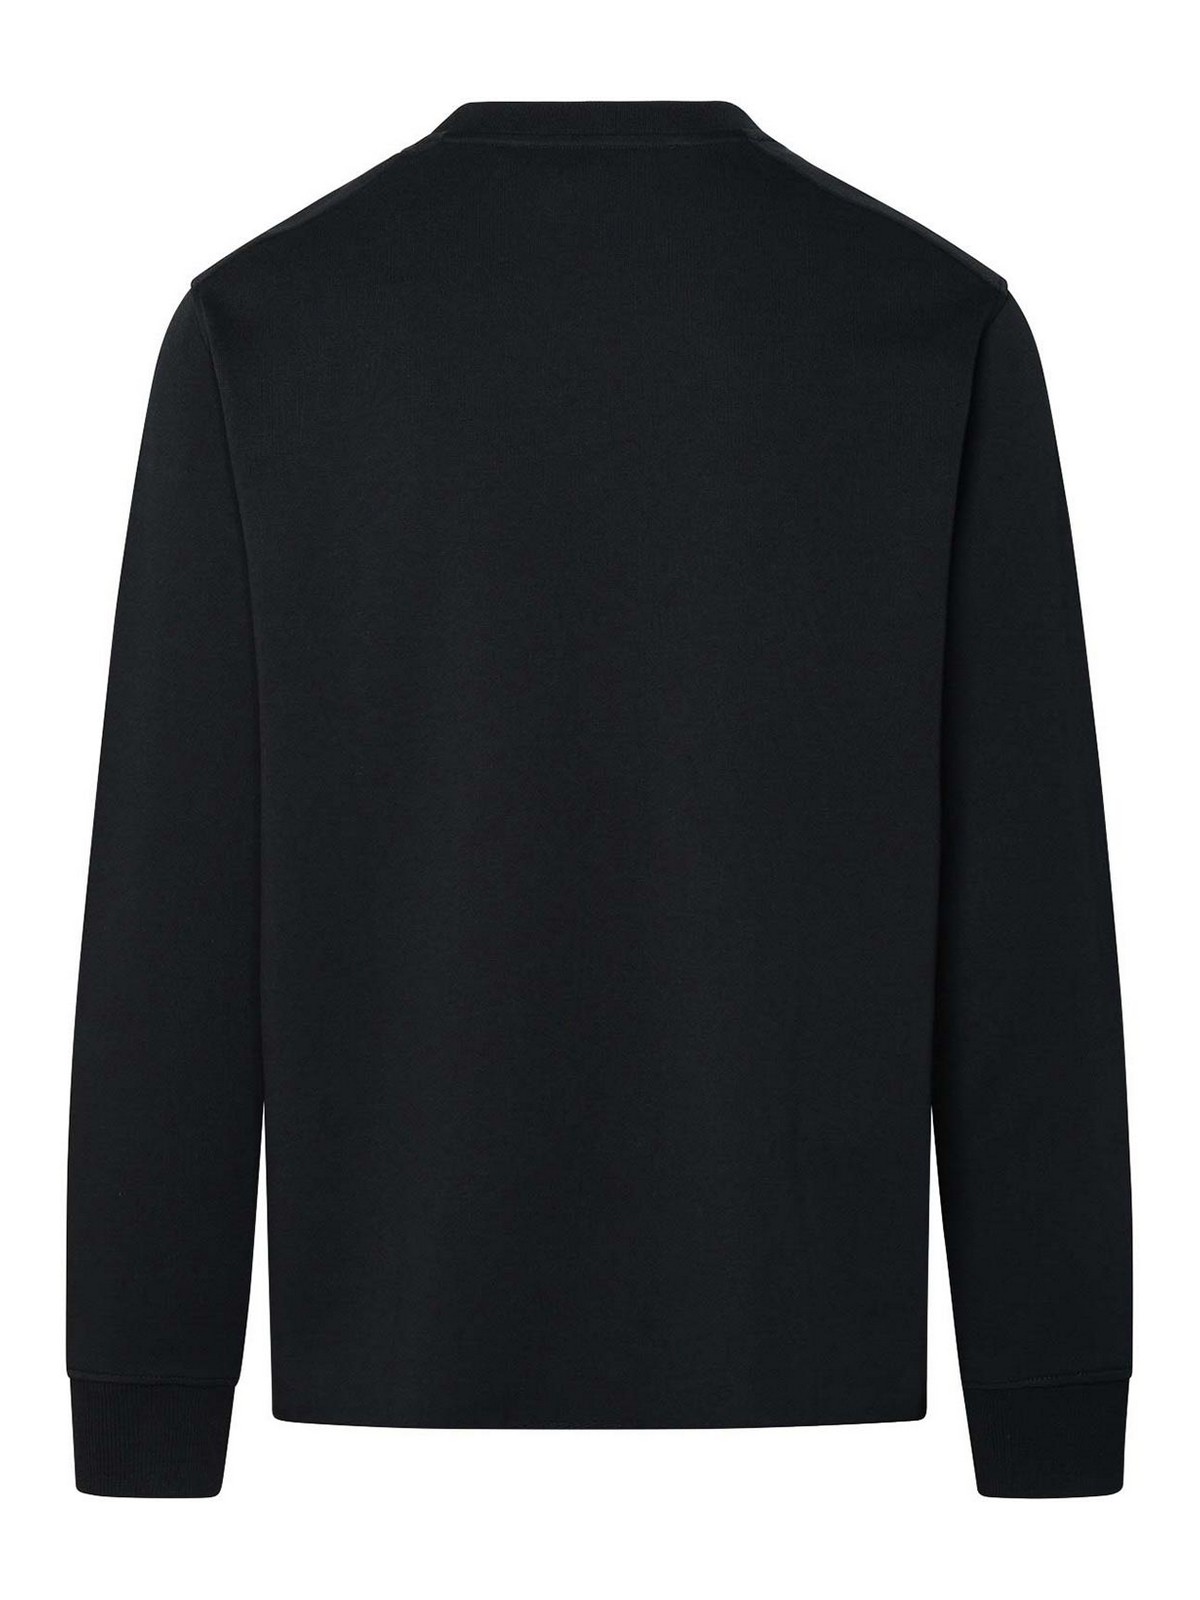 Shop Apc Black Cotton Sweatshirt